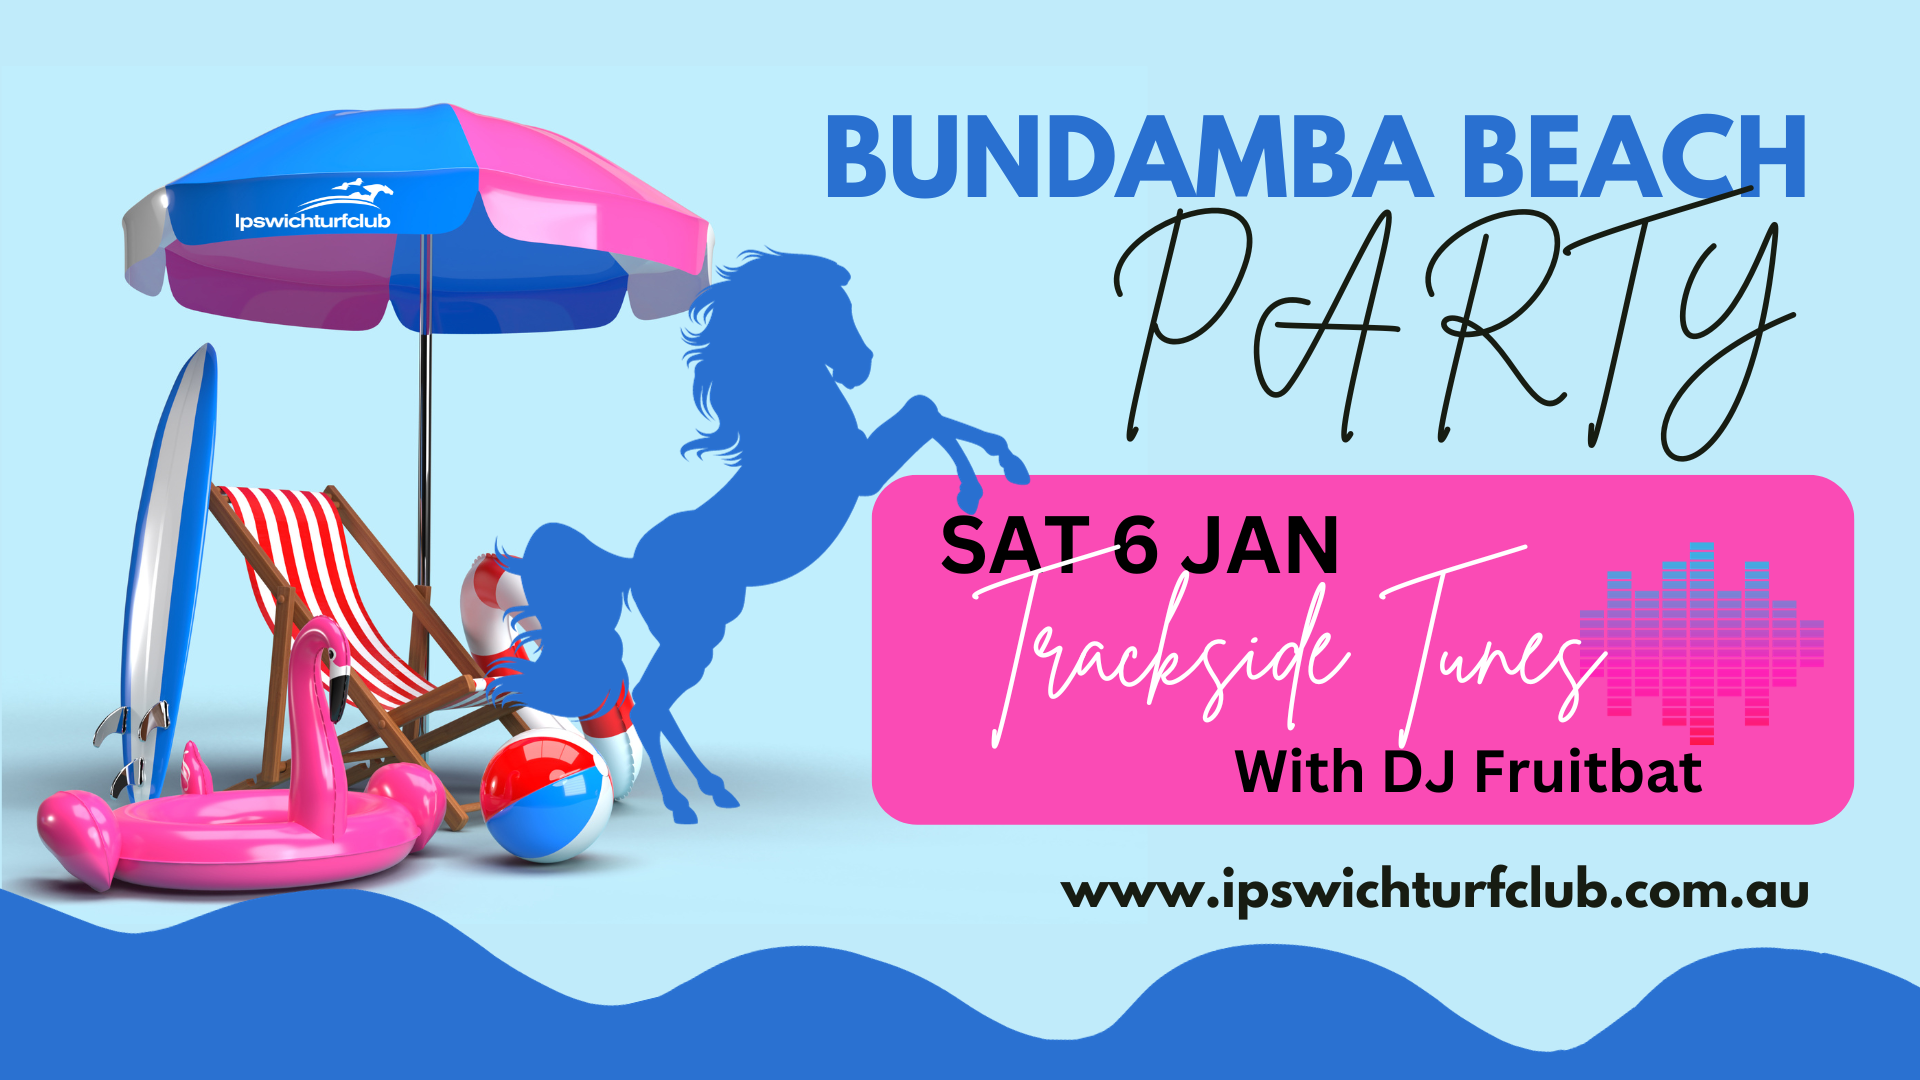 Bundamba Beach Party